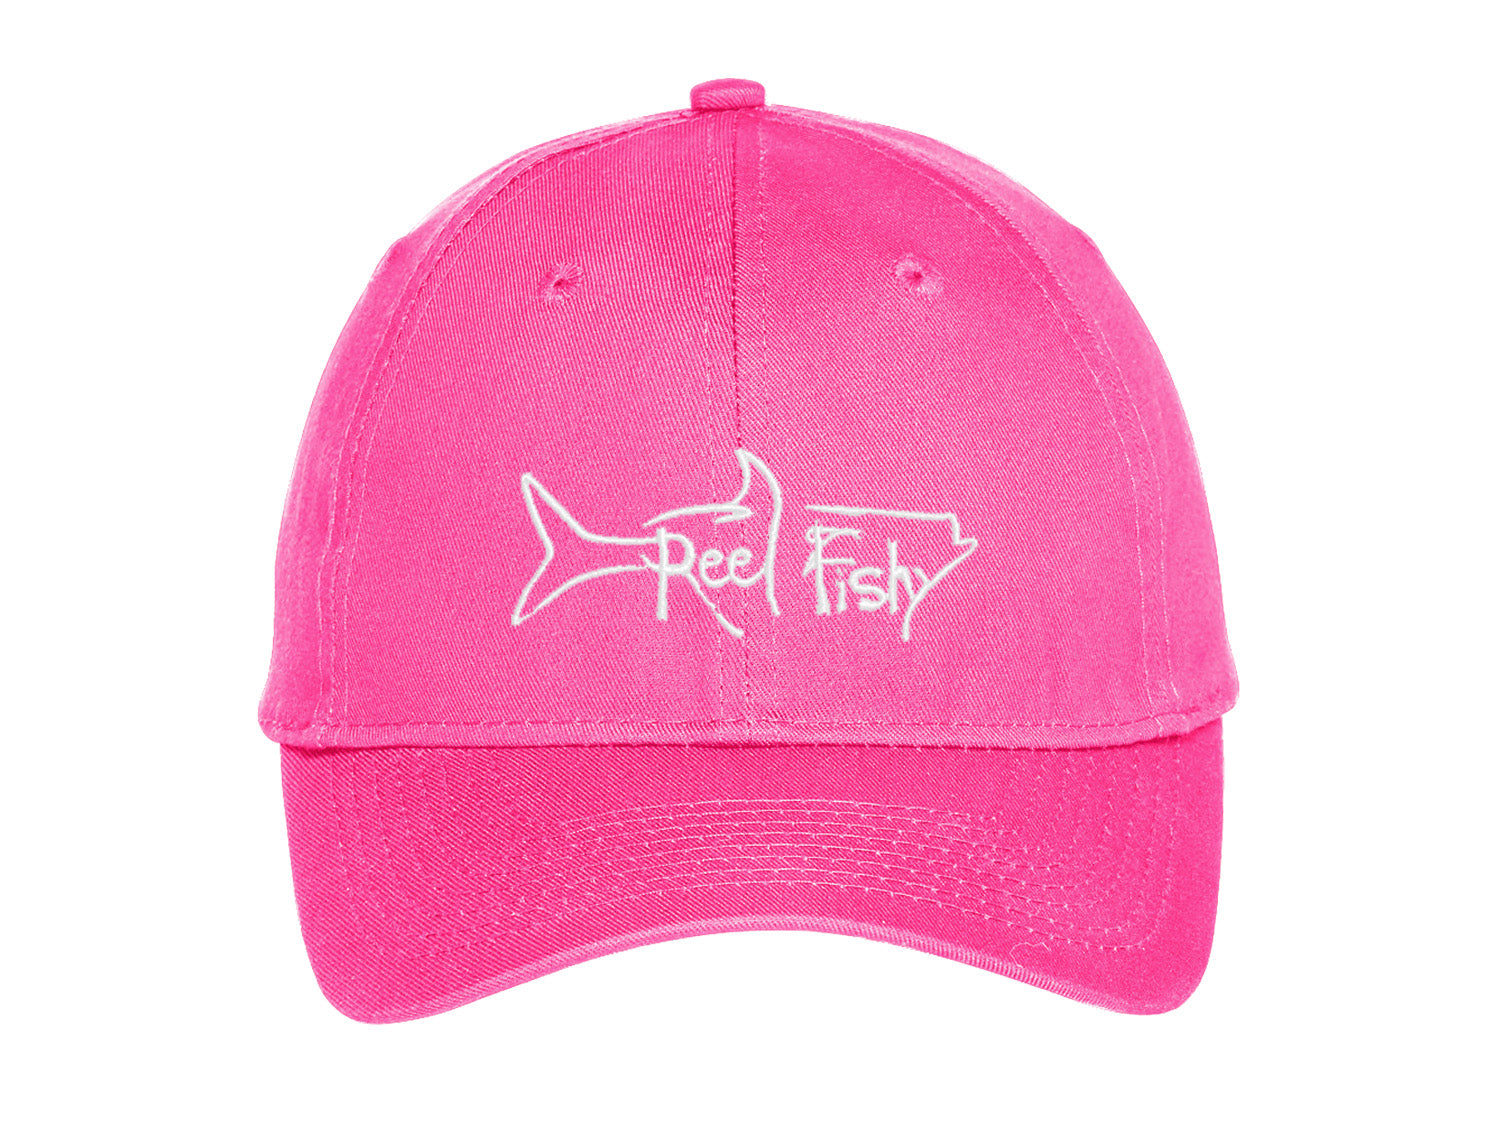 Youth Fishing Hats with Reel Fishy Tarpon Logo - Pink